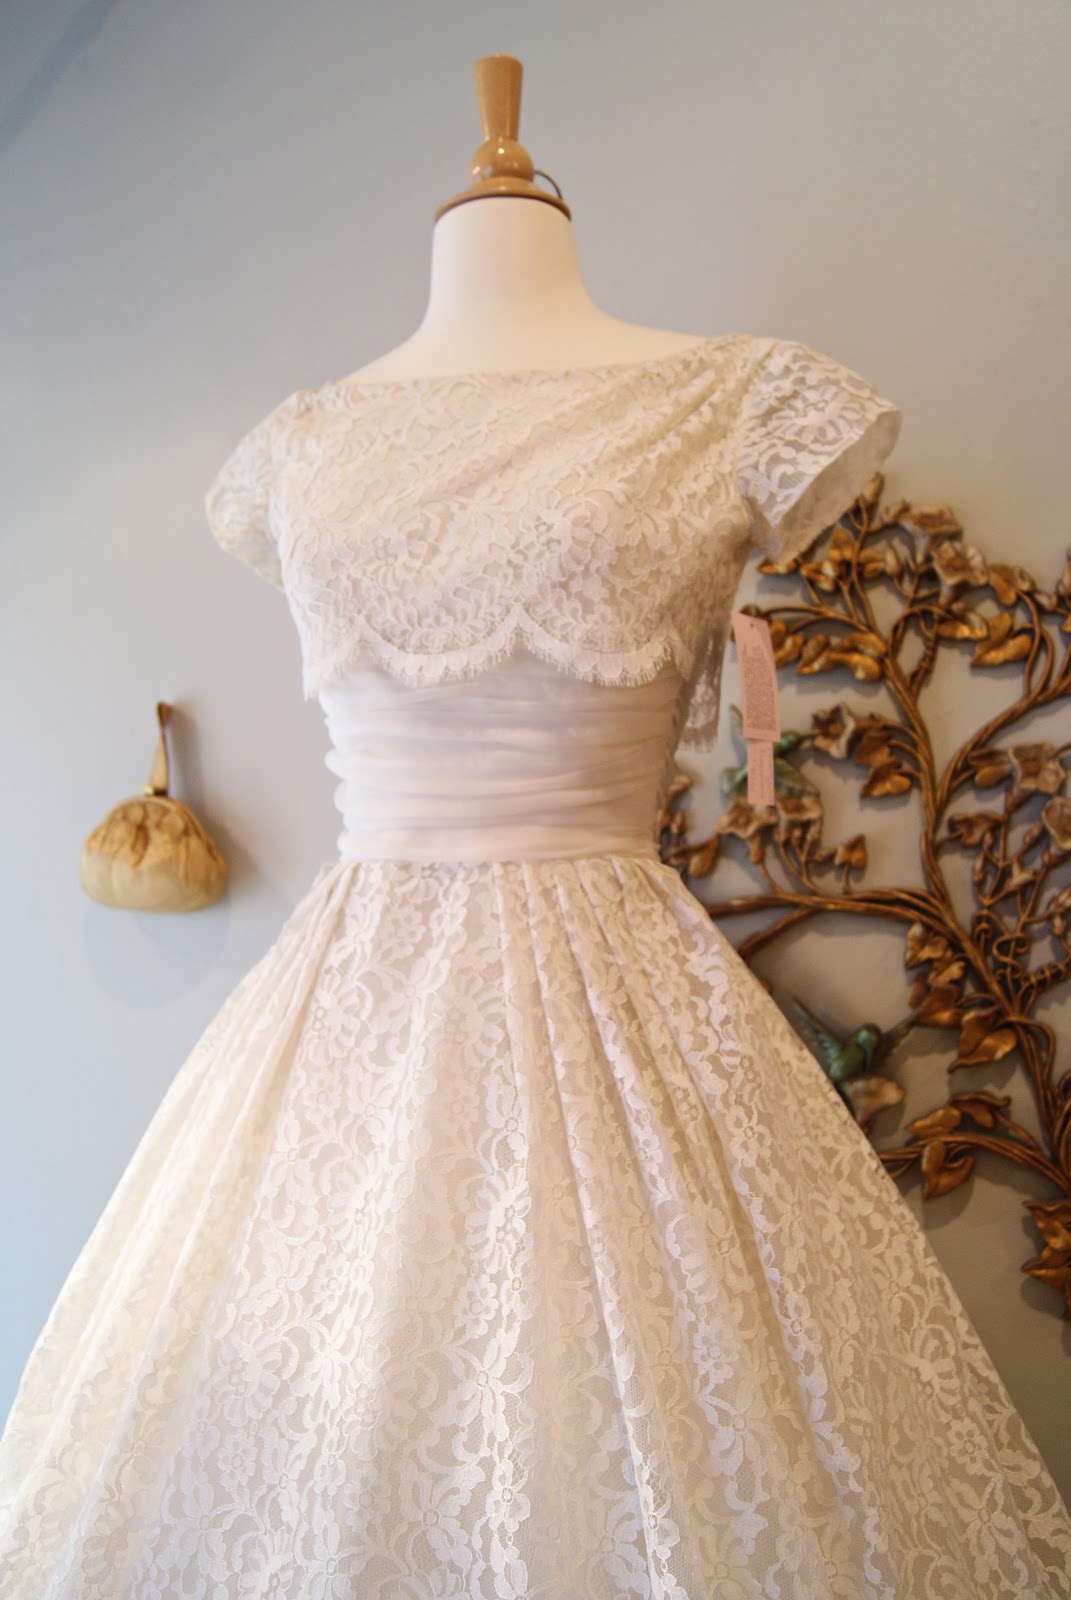 Xtabay Vintage Clothing Boutique - Portland, Oregon: Pretty Dress Alert!